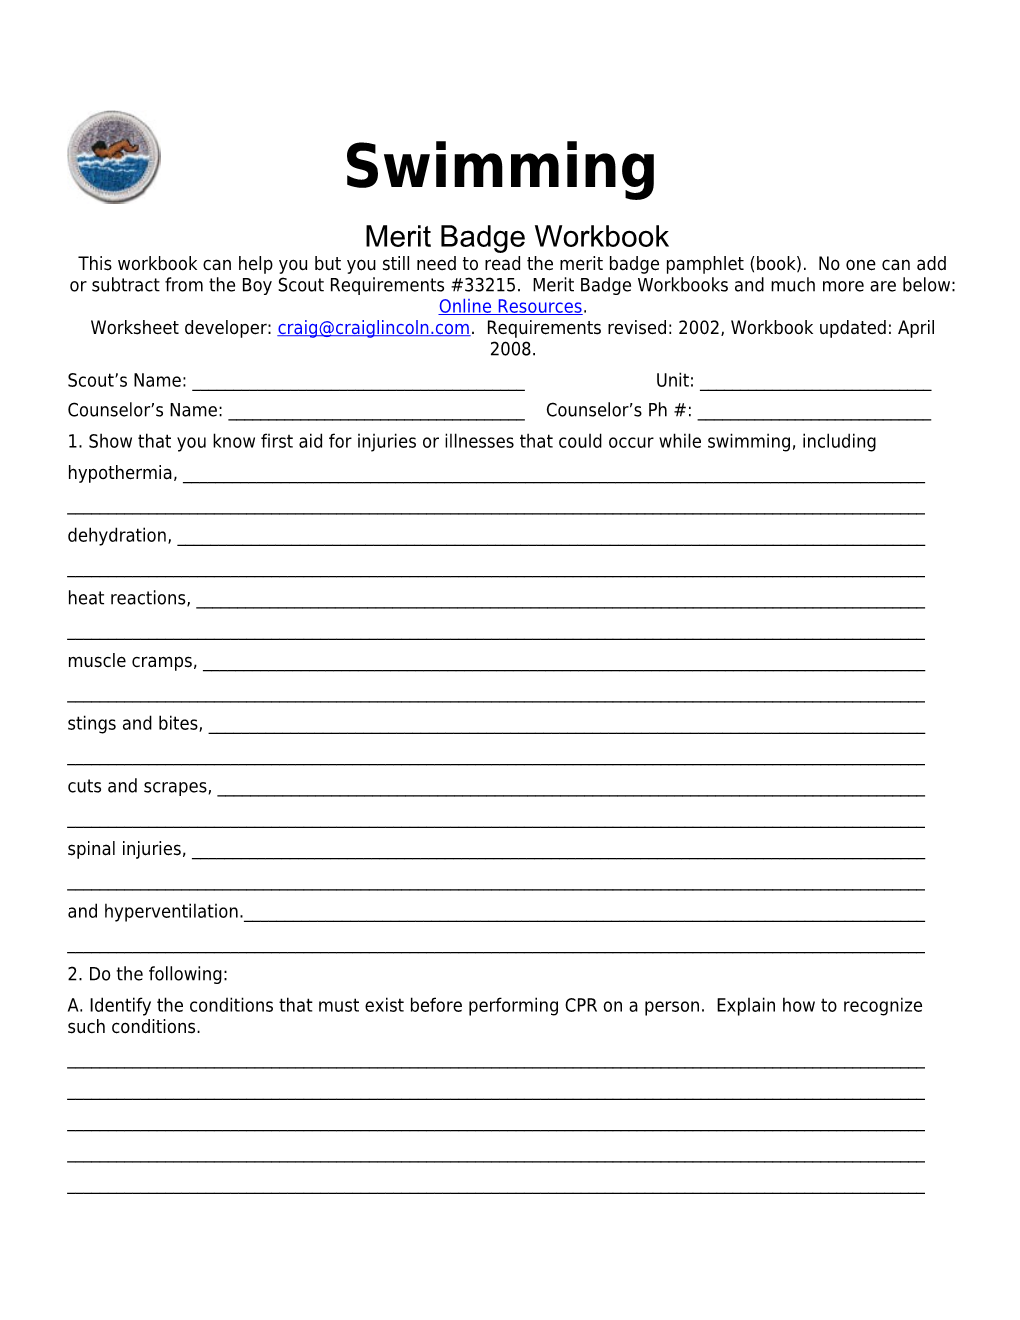 Swimming P. 2 Merit Badge Workbook Scout's Name: ______